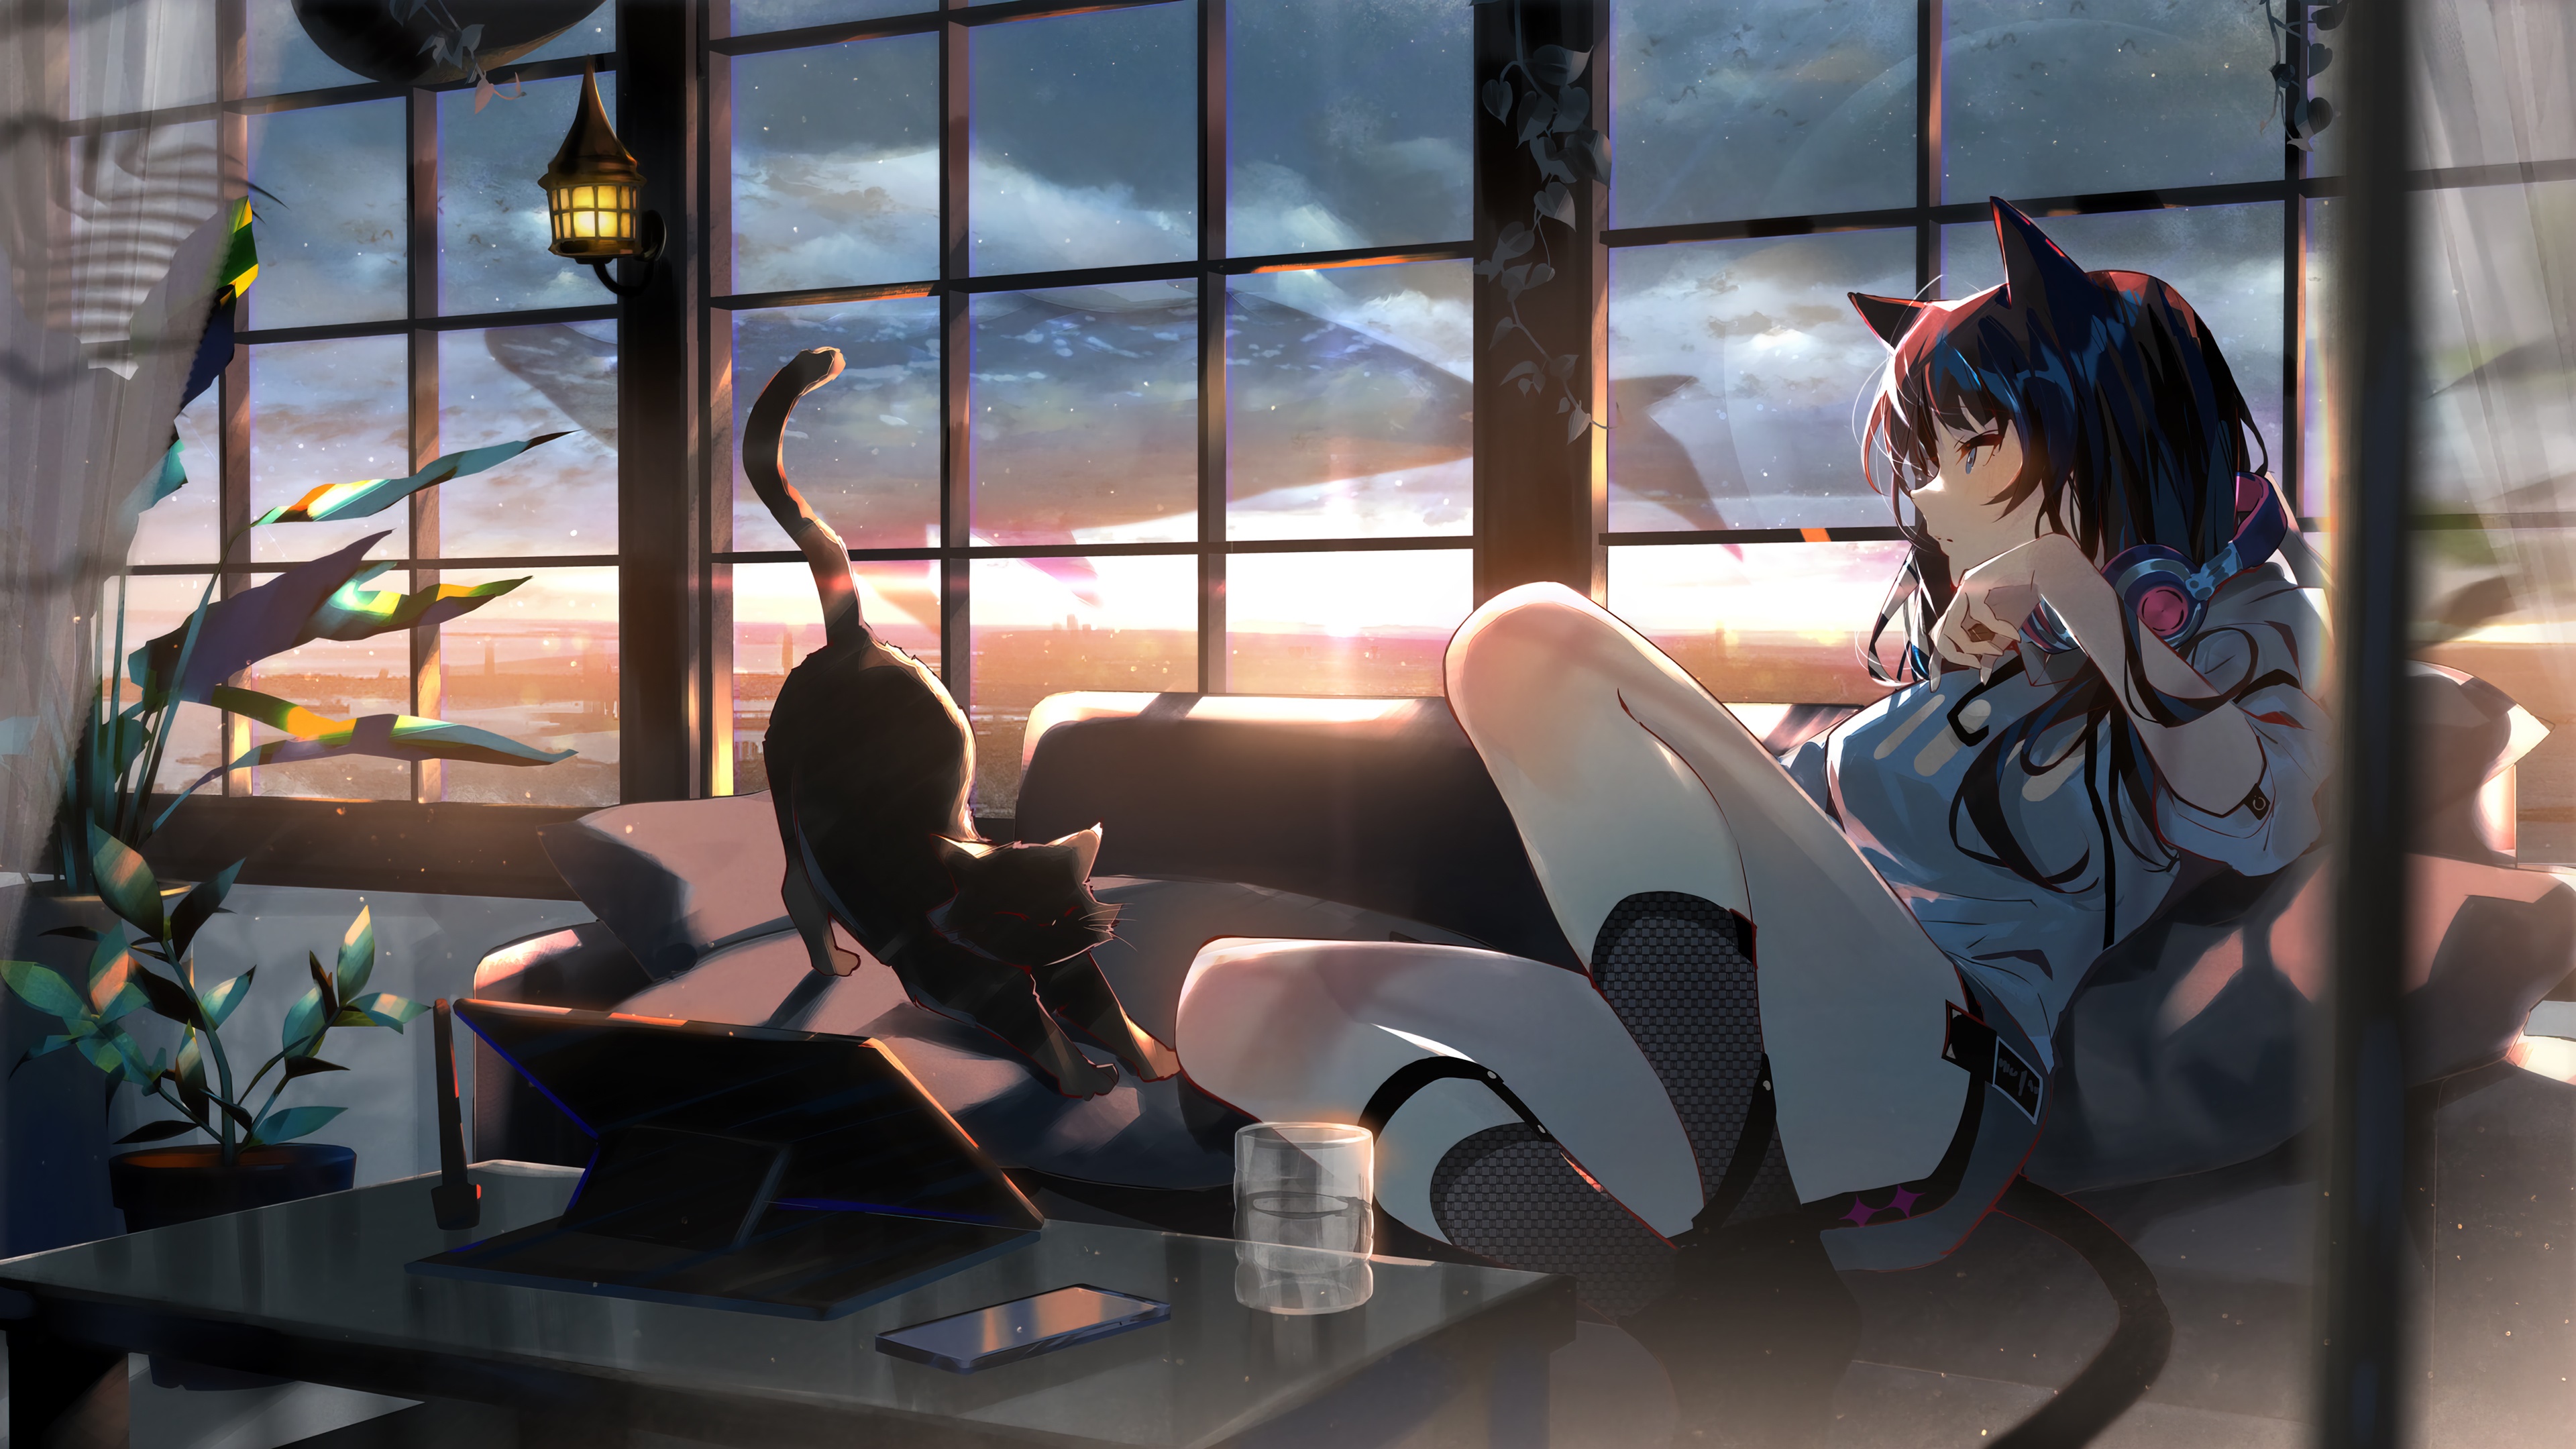 4K Anime Girl Digital Art Wallpaper, HD Anime 4K Wallpapers, Images and  Background - Wallpapers Den